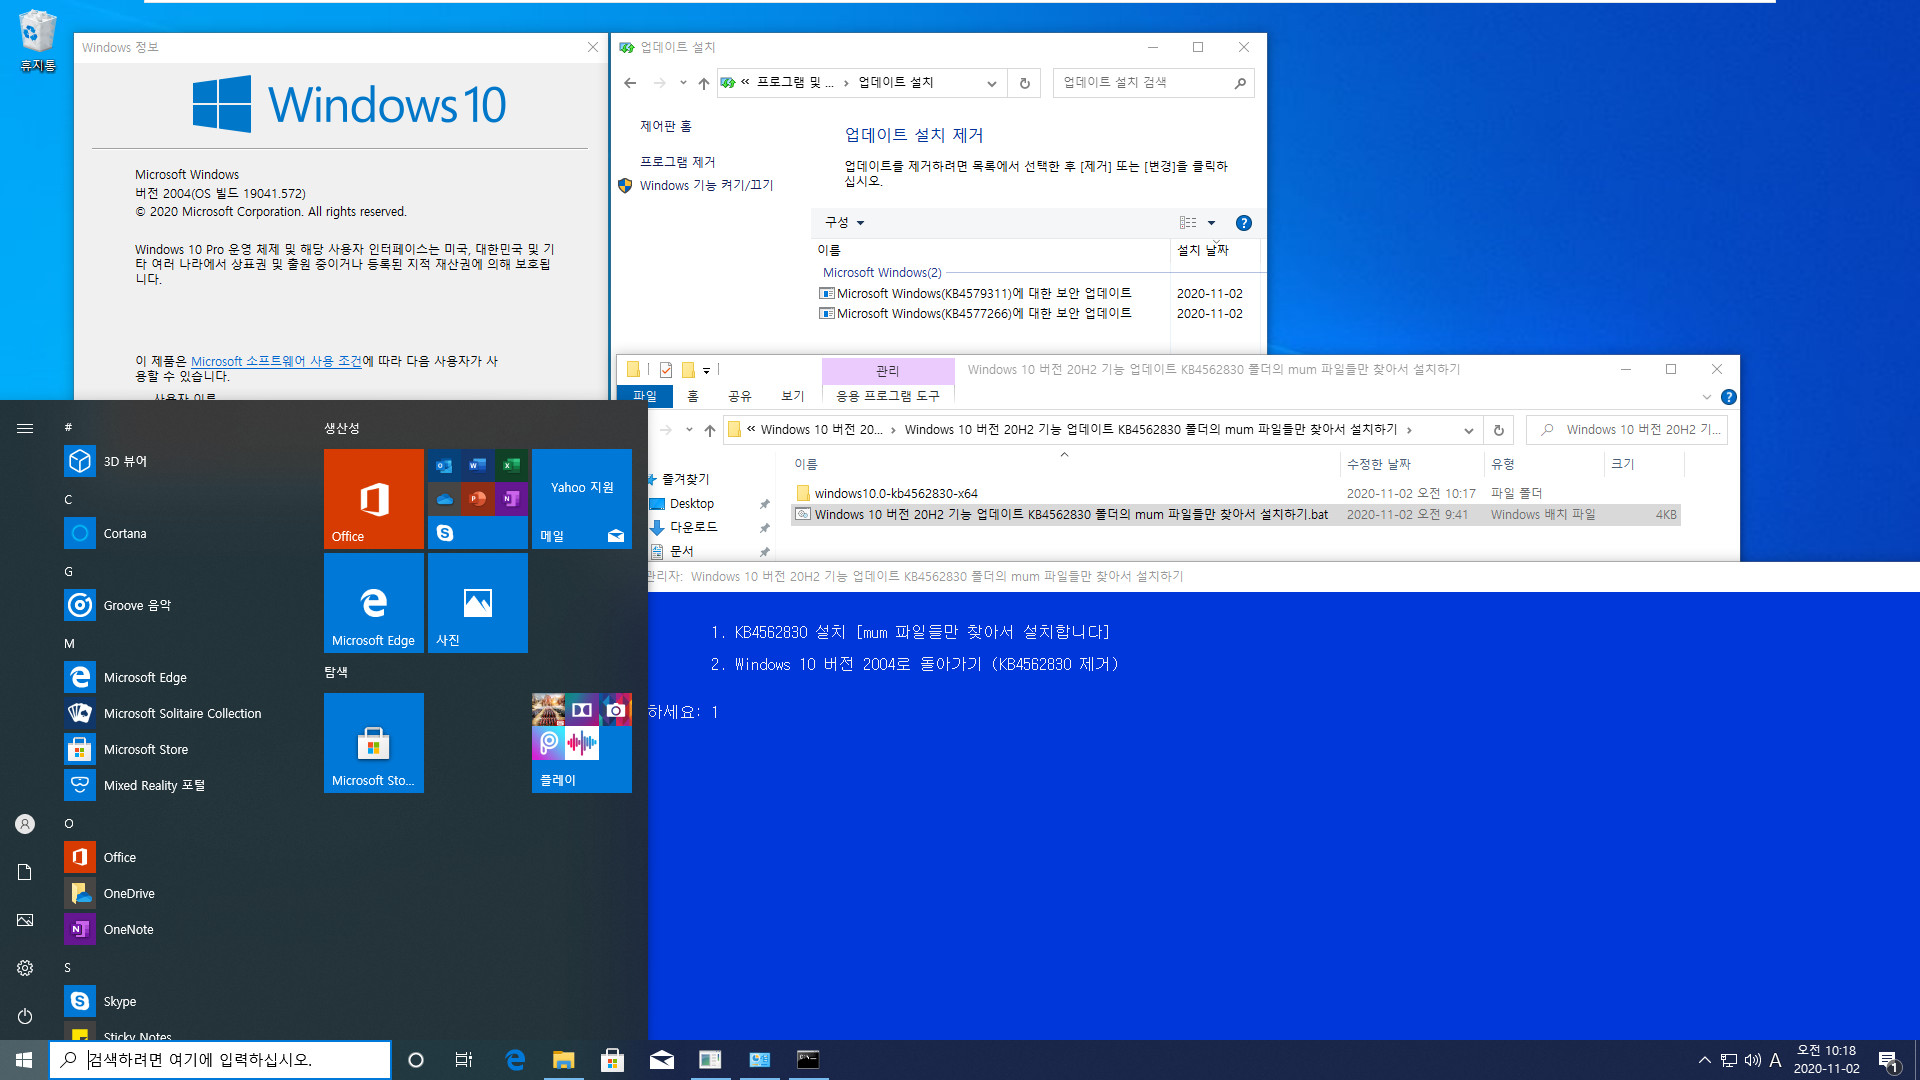 Windows 10 버전 20H2 기능 업데이트 KB4562830 폴더의 mum 파일들만 찾아서 설치하기.bat - 크로미엄 엣지 설치하지 않고 버전 20H2만 설치하기 테스트 - 뻘짓했네요 2020-11-02_101825.jpg